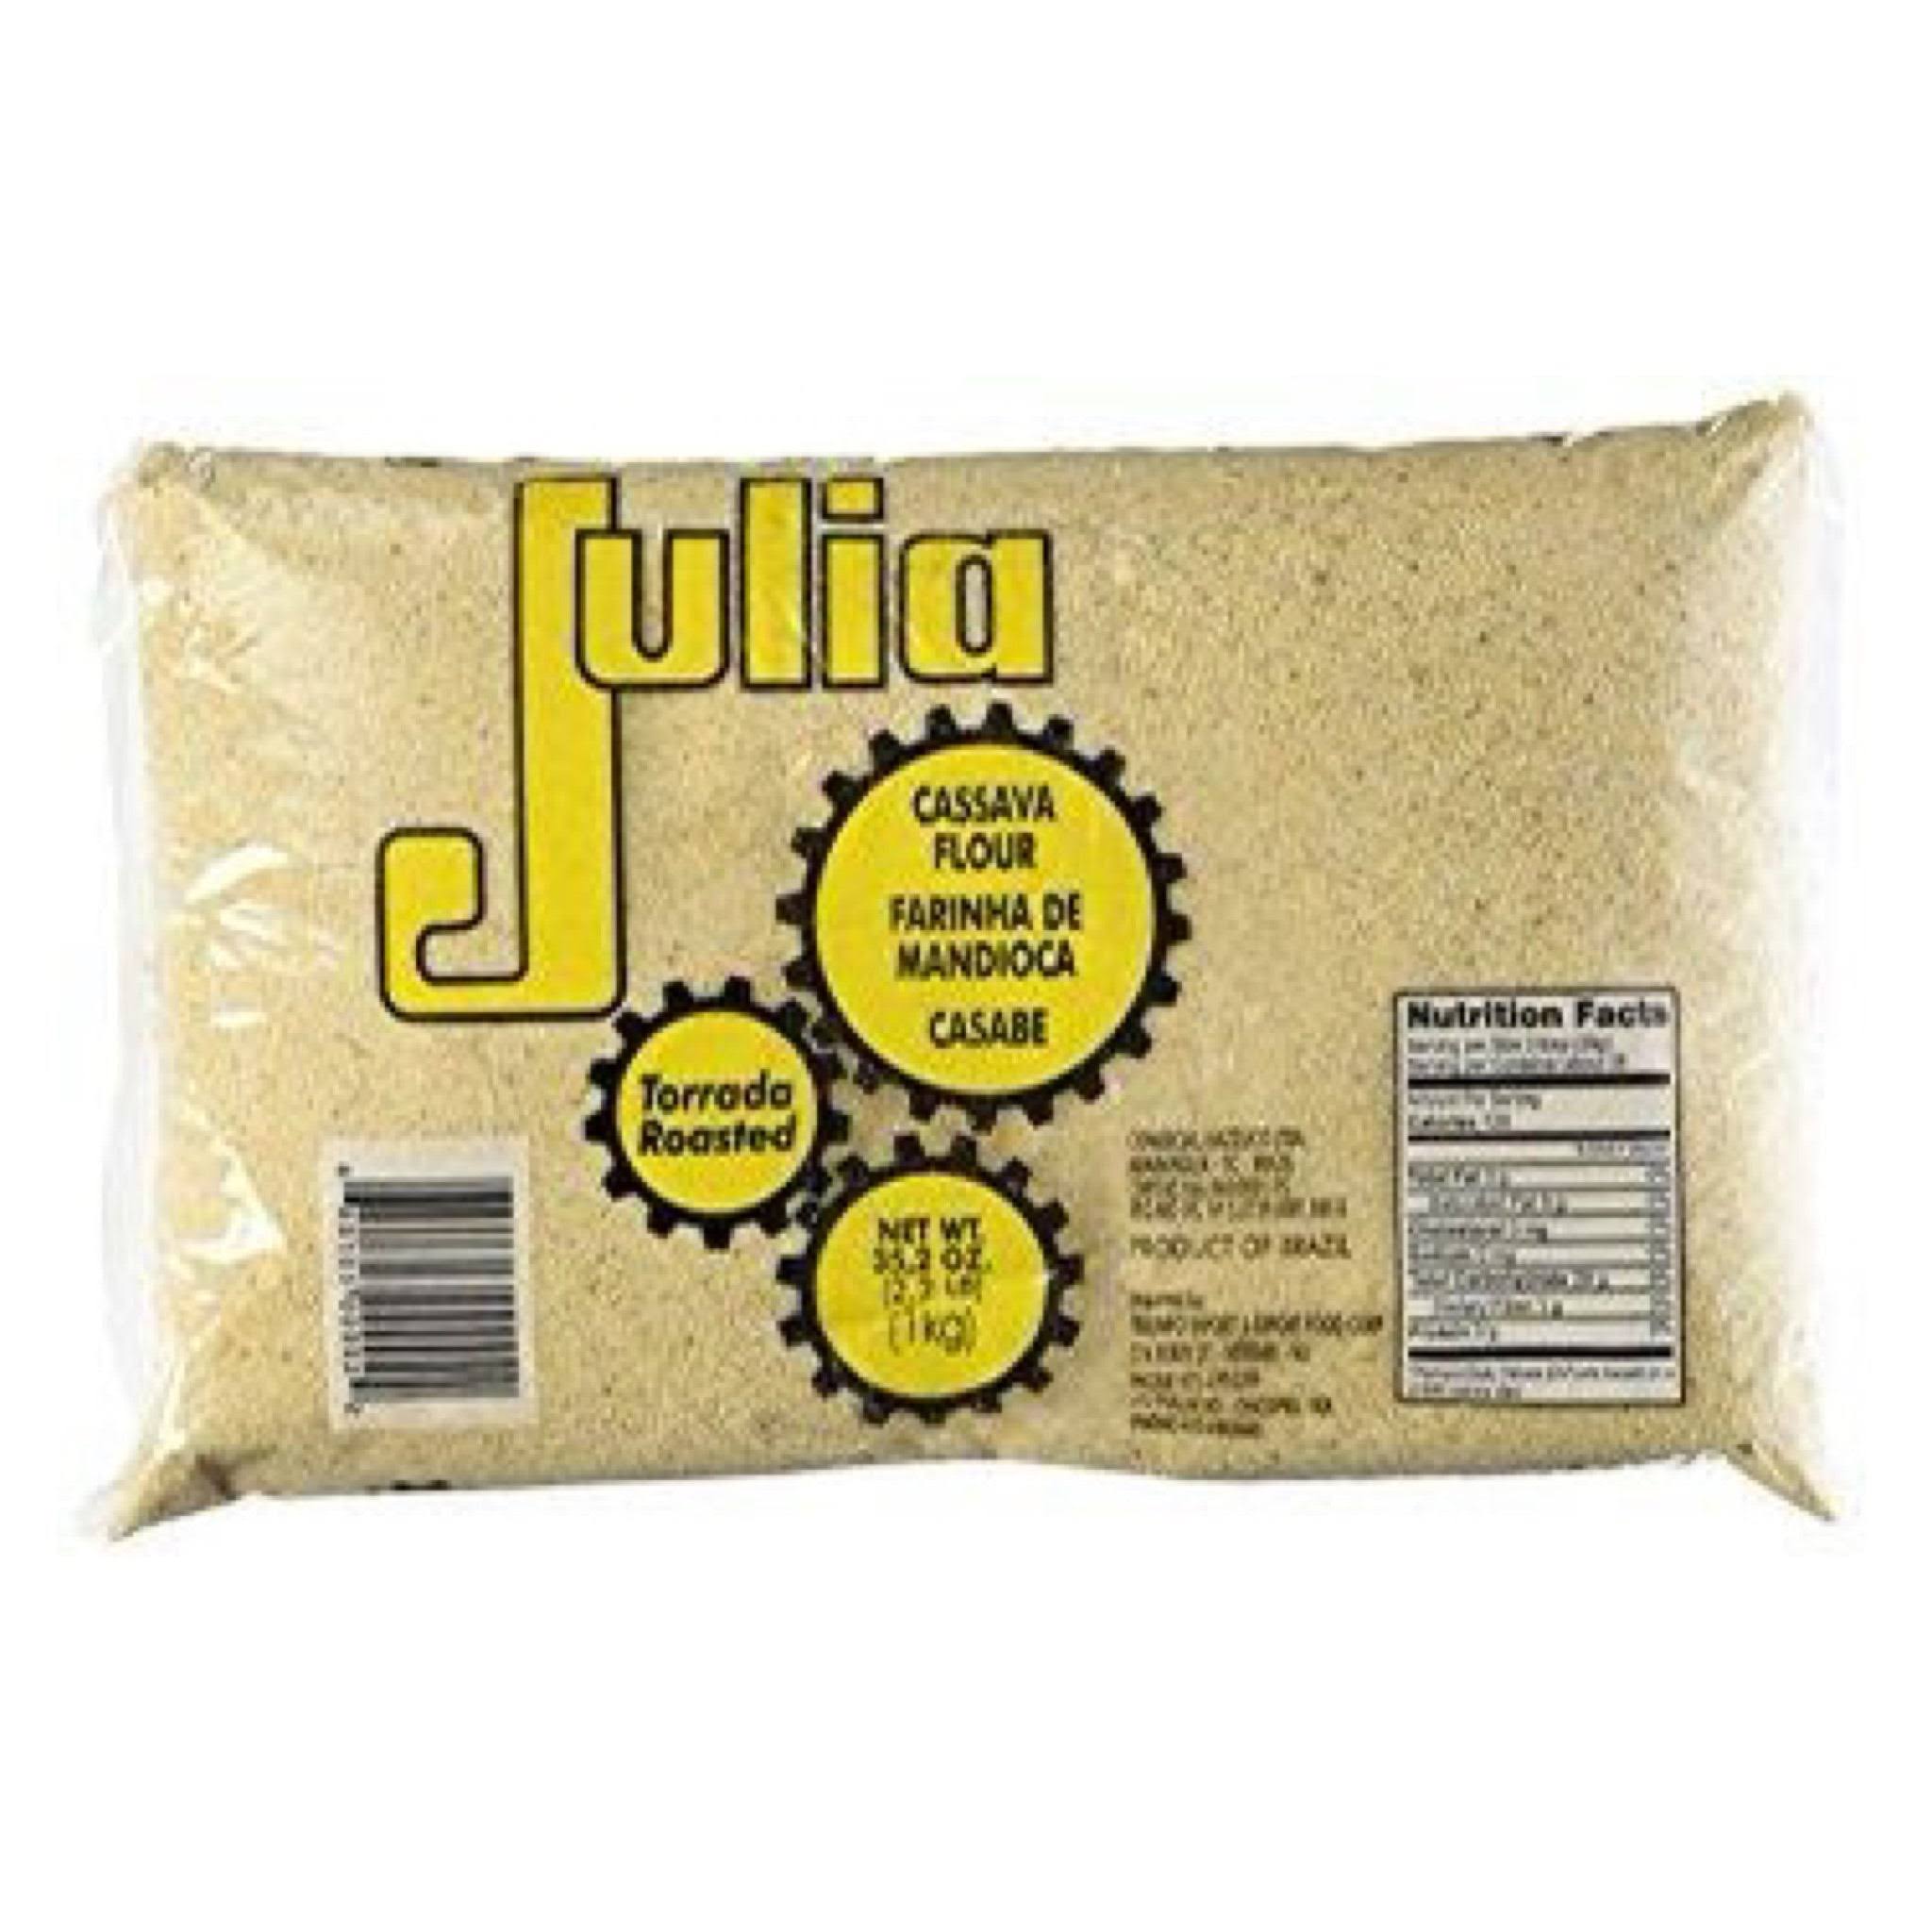 Julia Seasoned Cassava Flour - 35.2oz